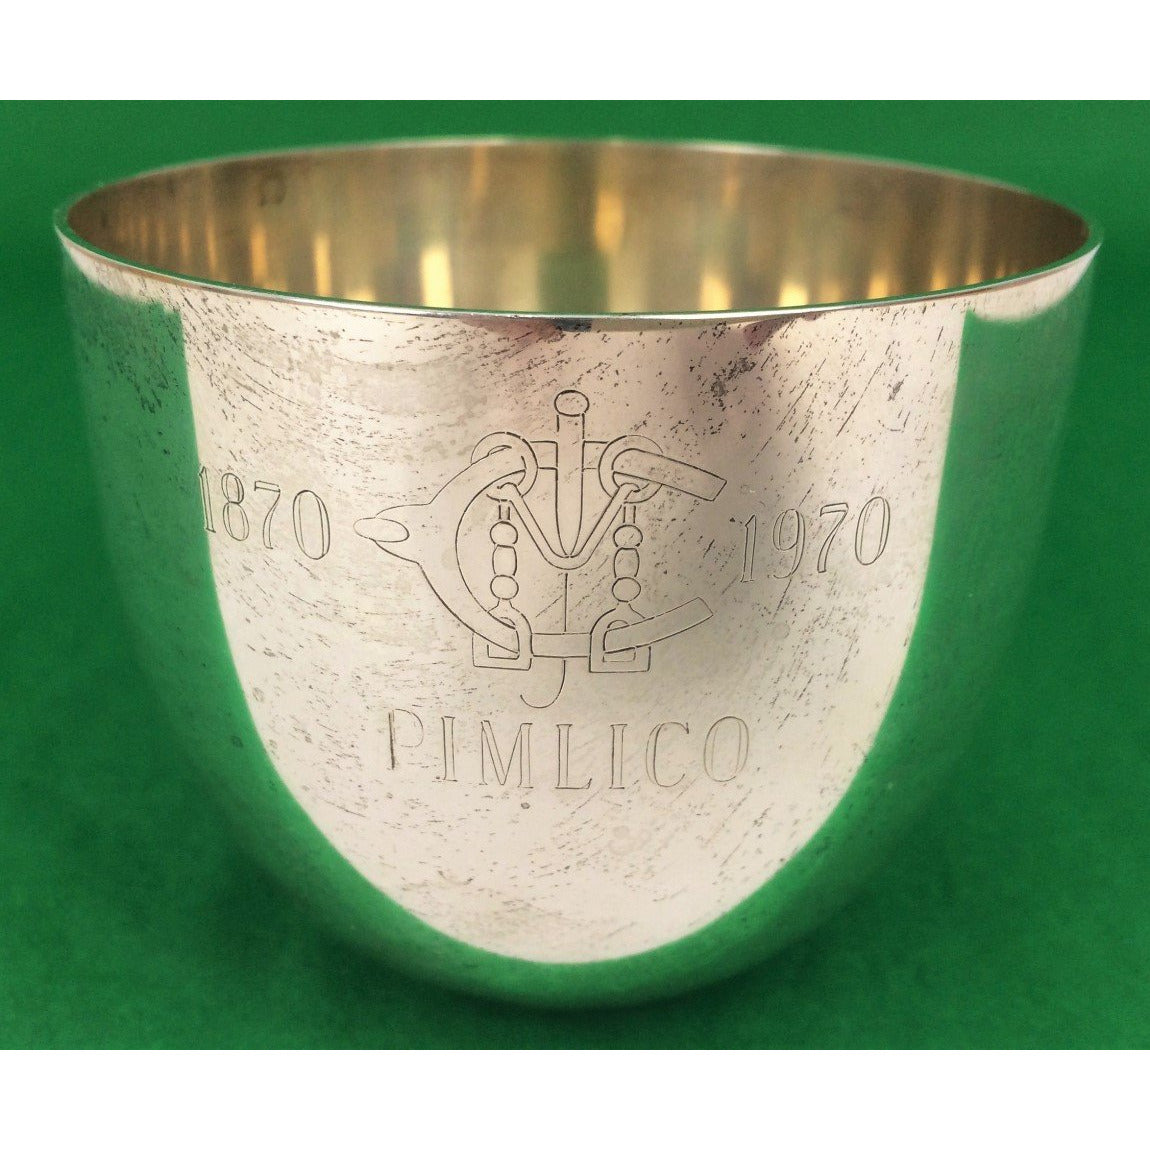 Pimlico Stieff Sterling Jefferson Cup 1870-1970